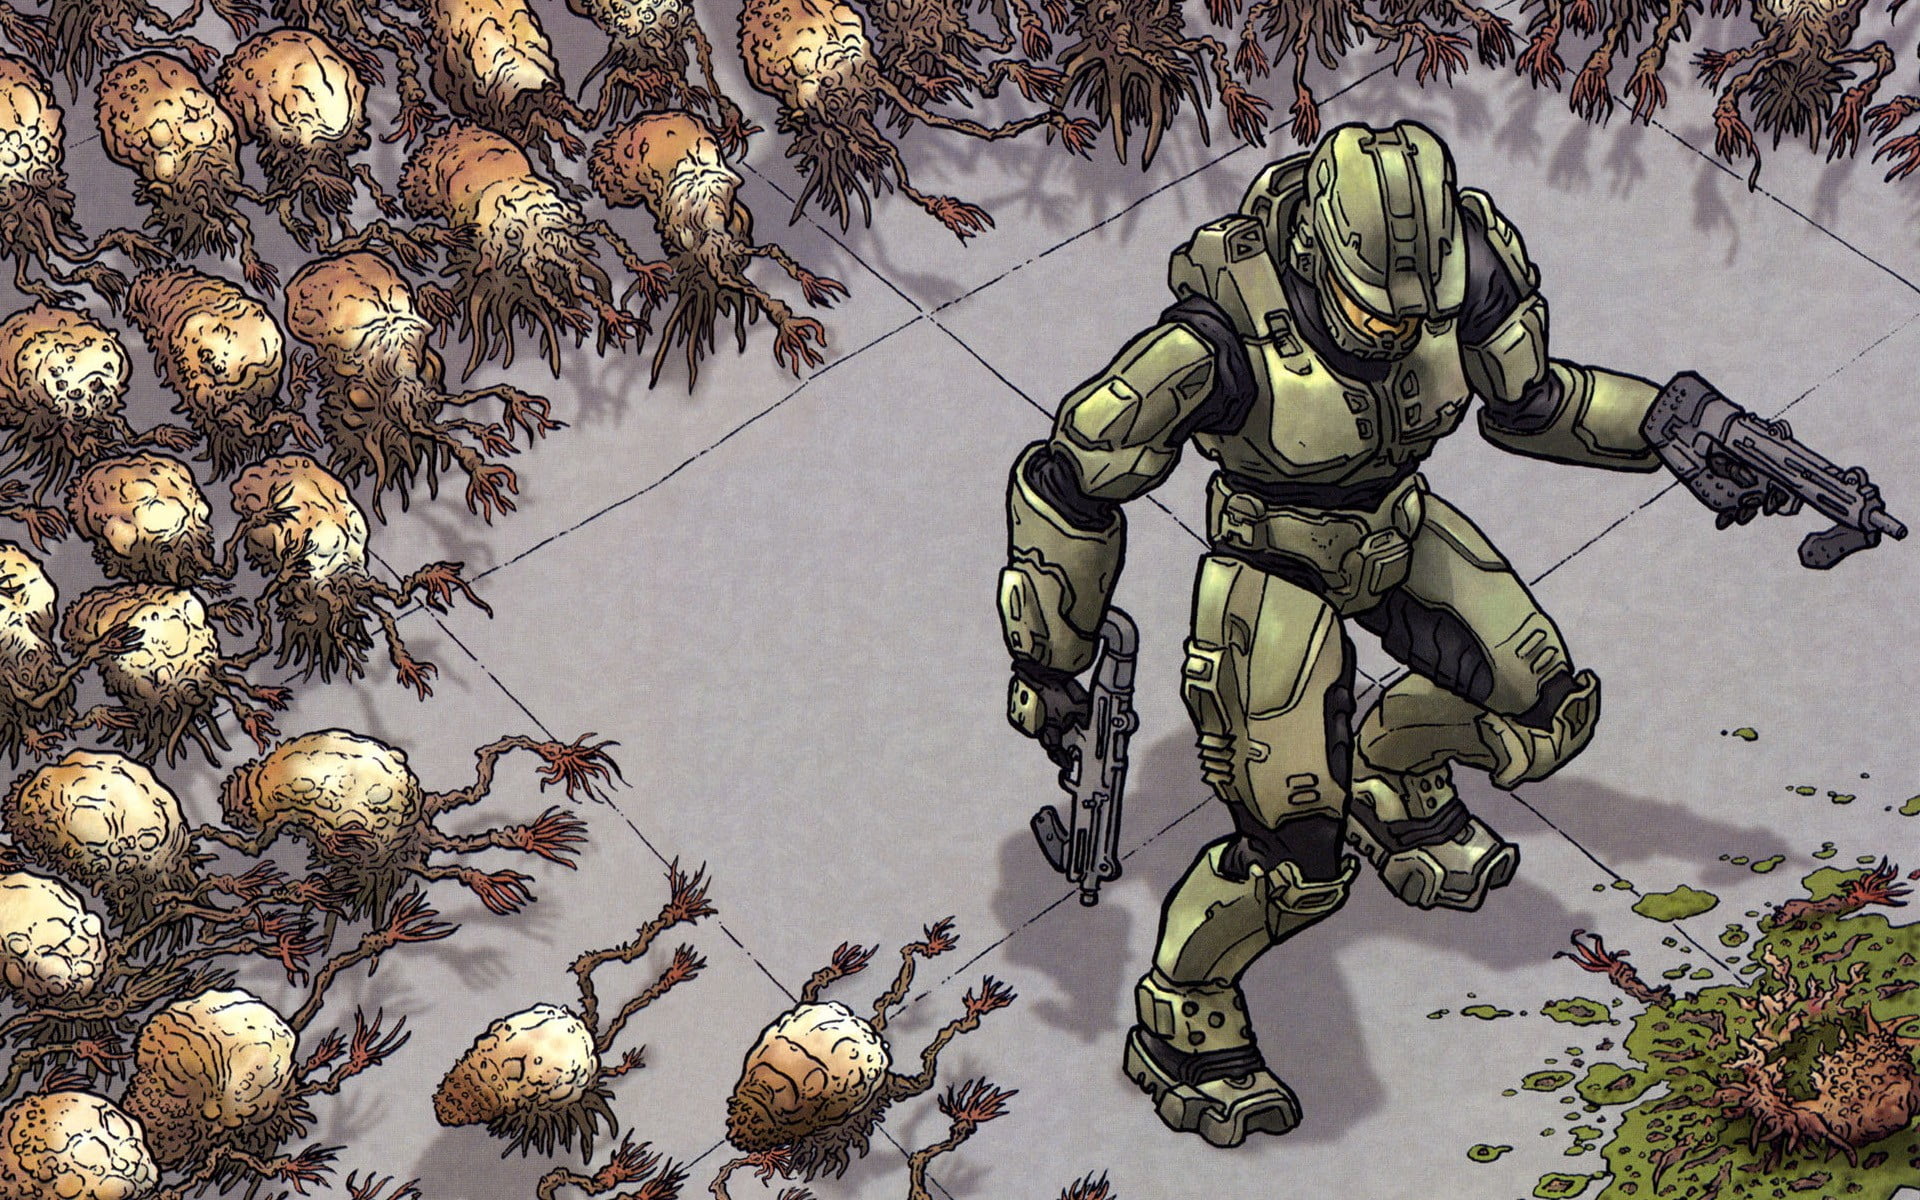 grey and brown robot anime character screenshot, Halo, Master Chief, Halo 2, The Floods (Halo)